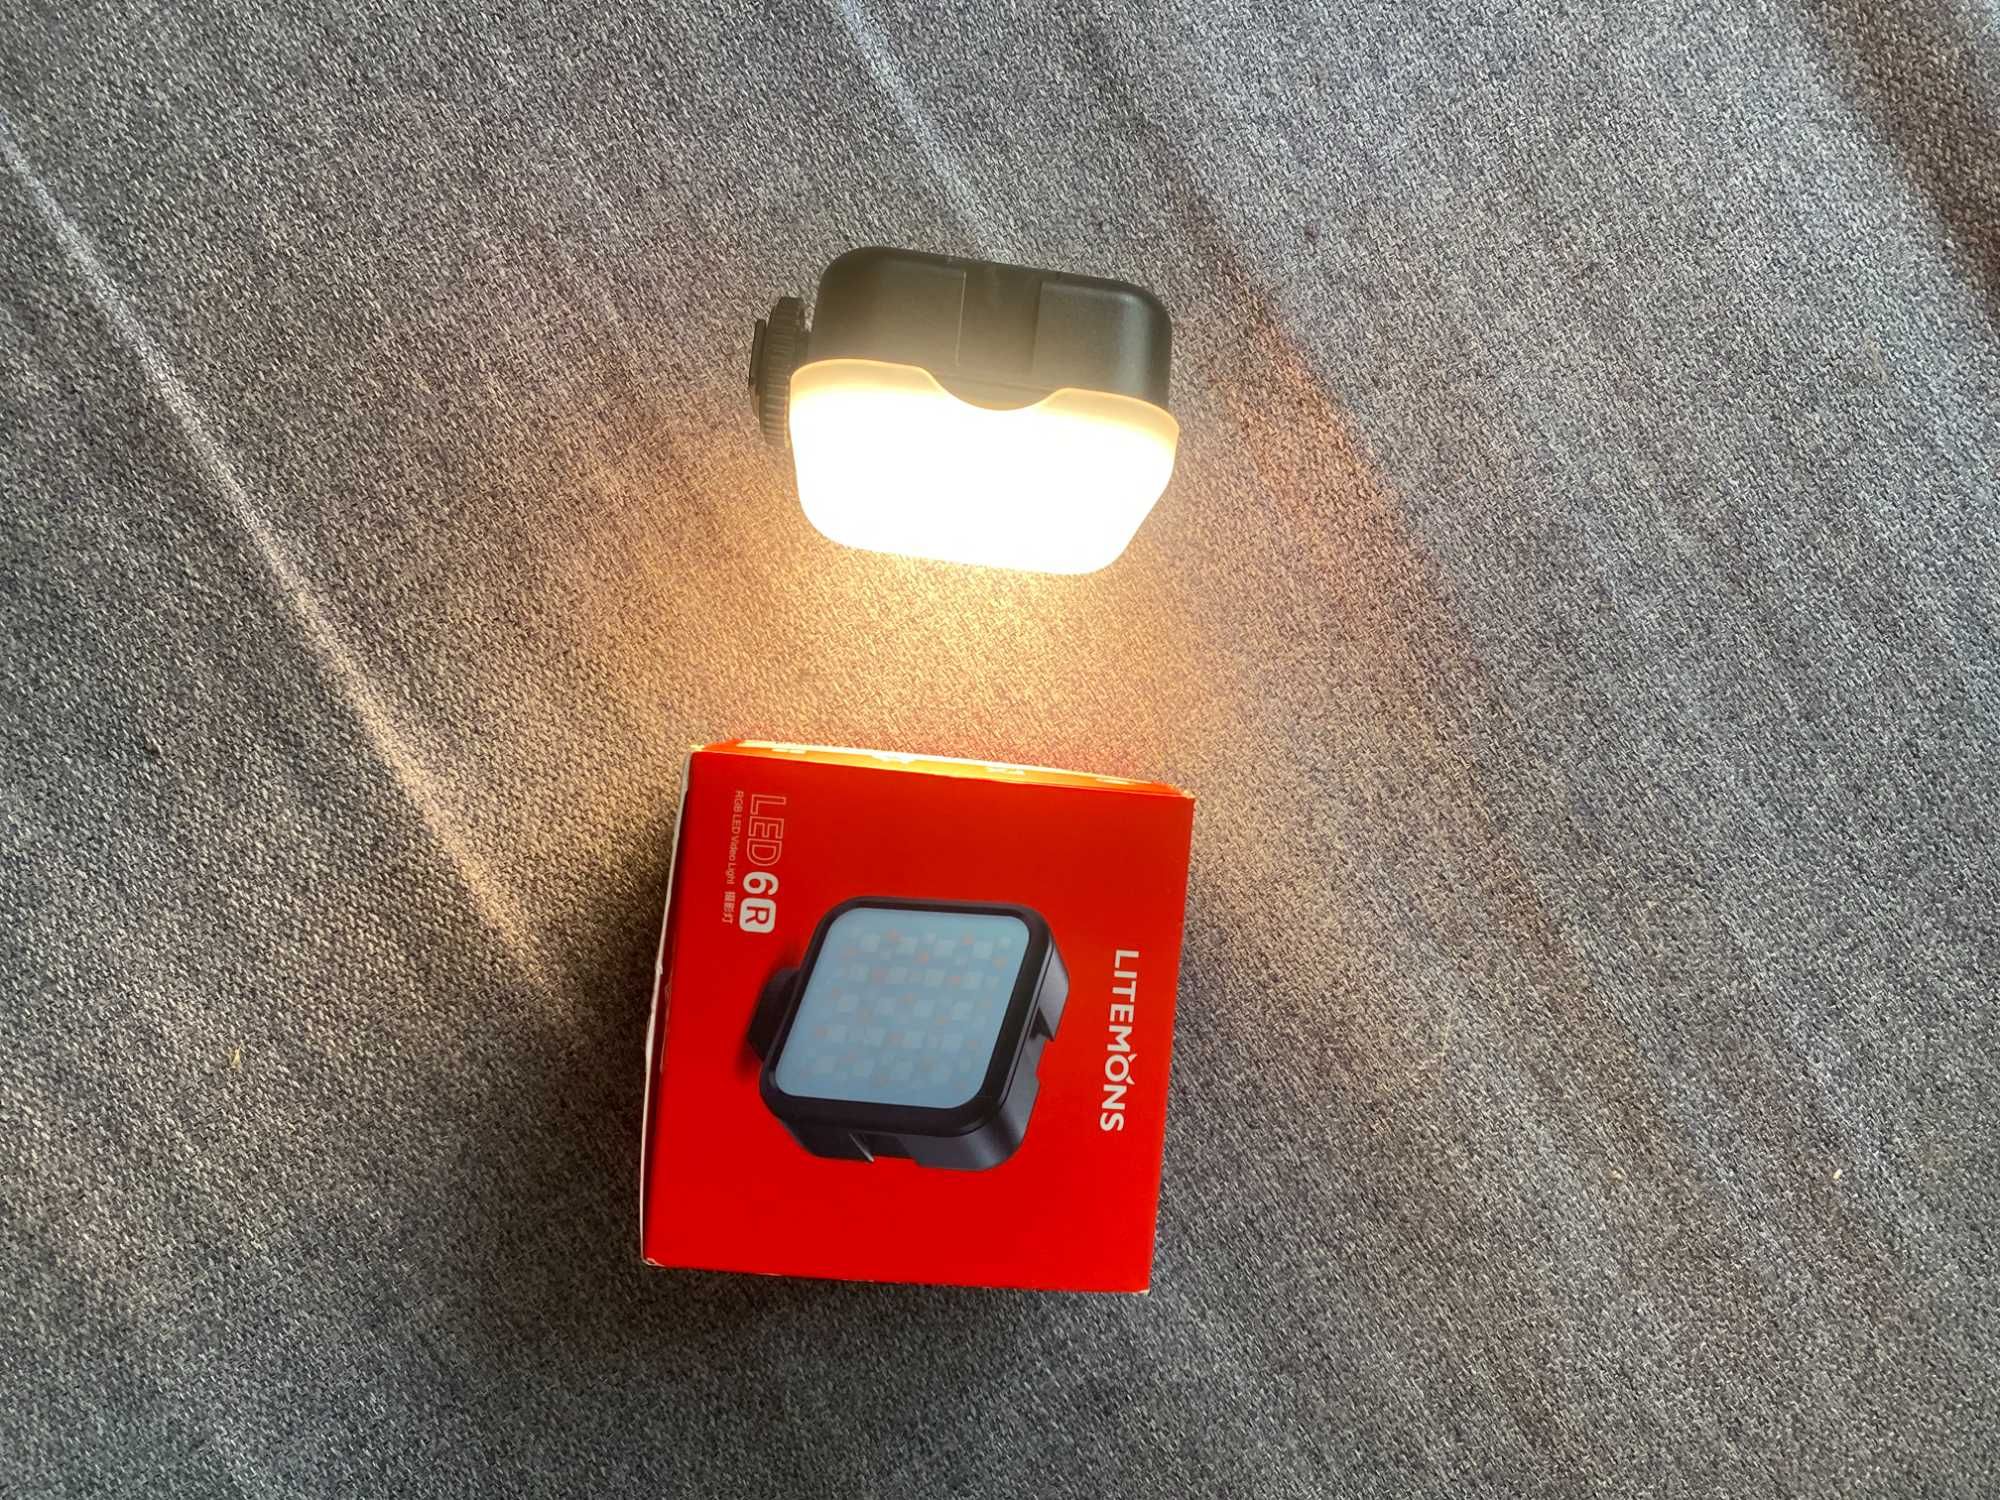 Godox LITEMONS LED6R RGB LED Lampa foto wideo